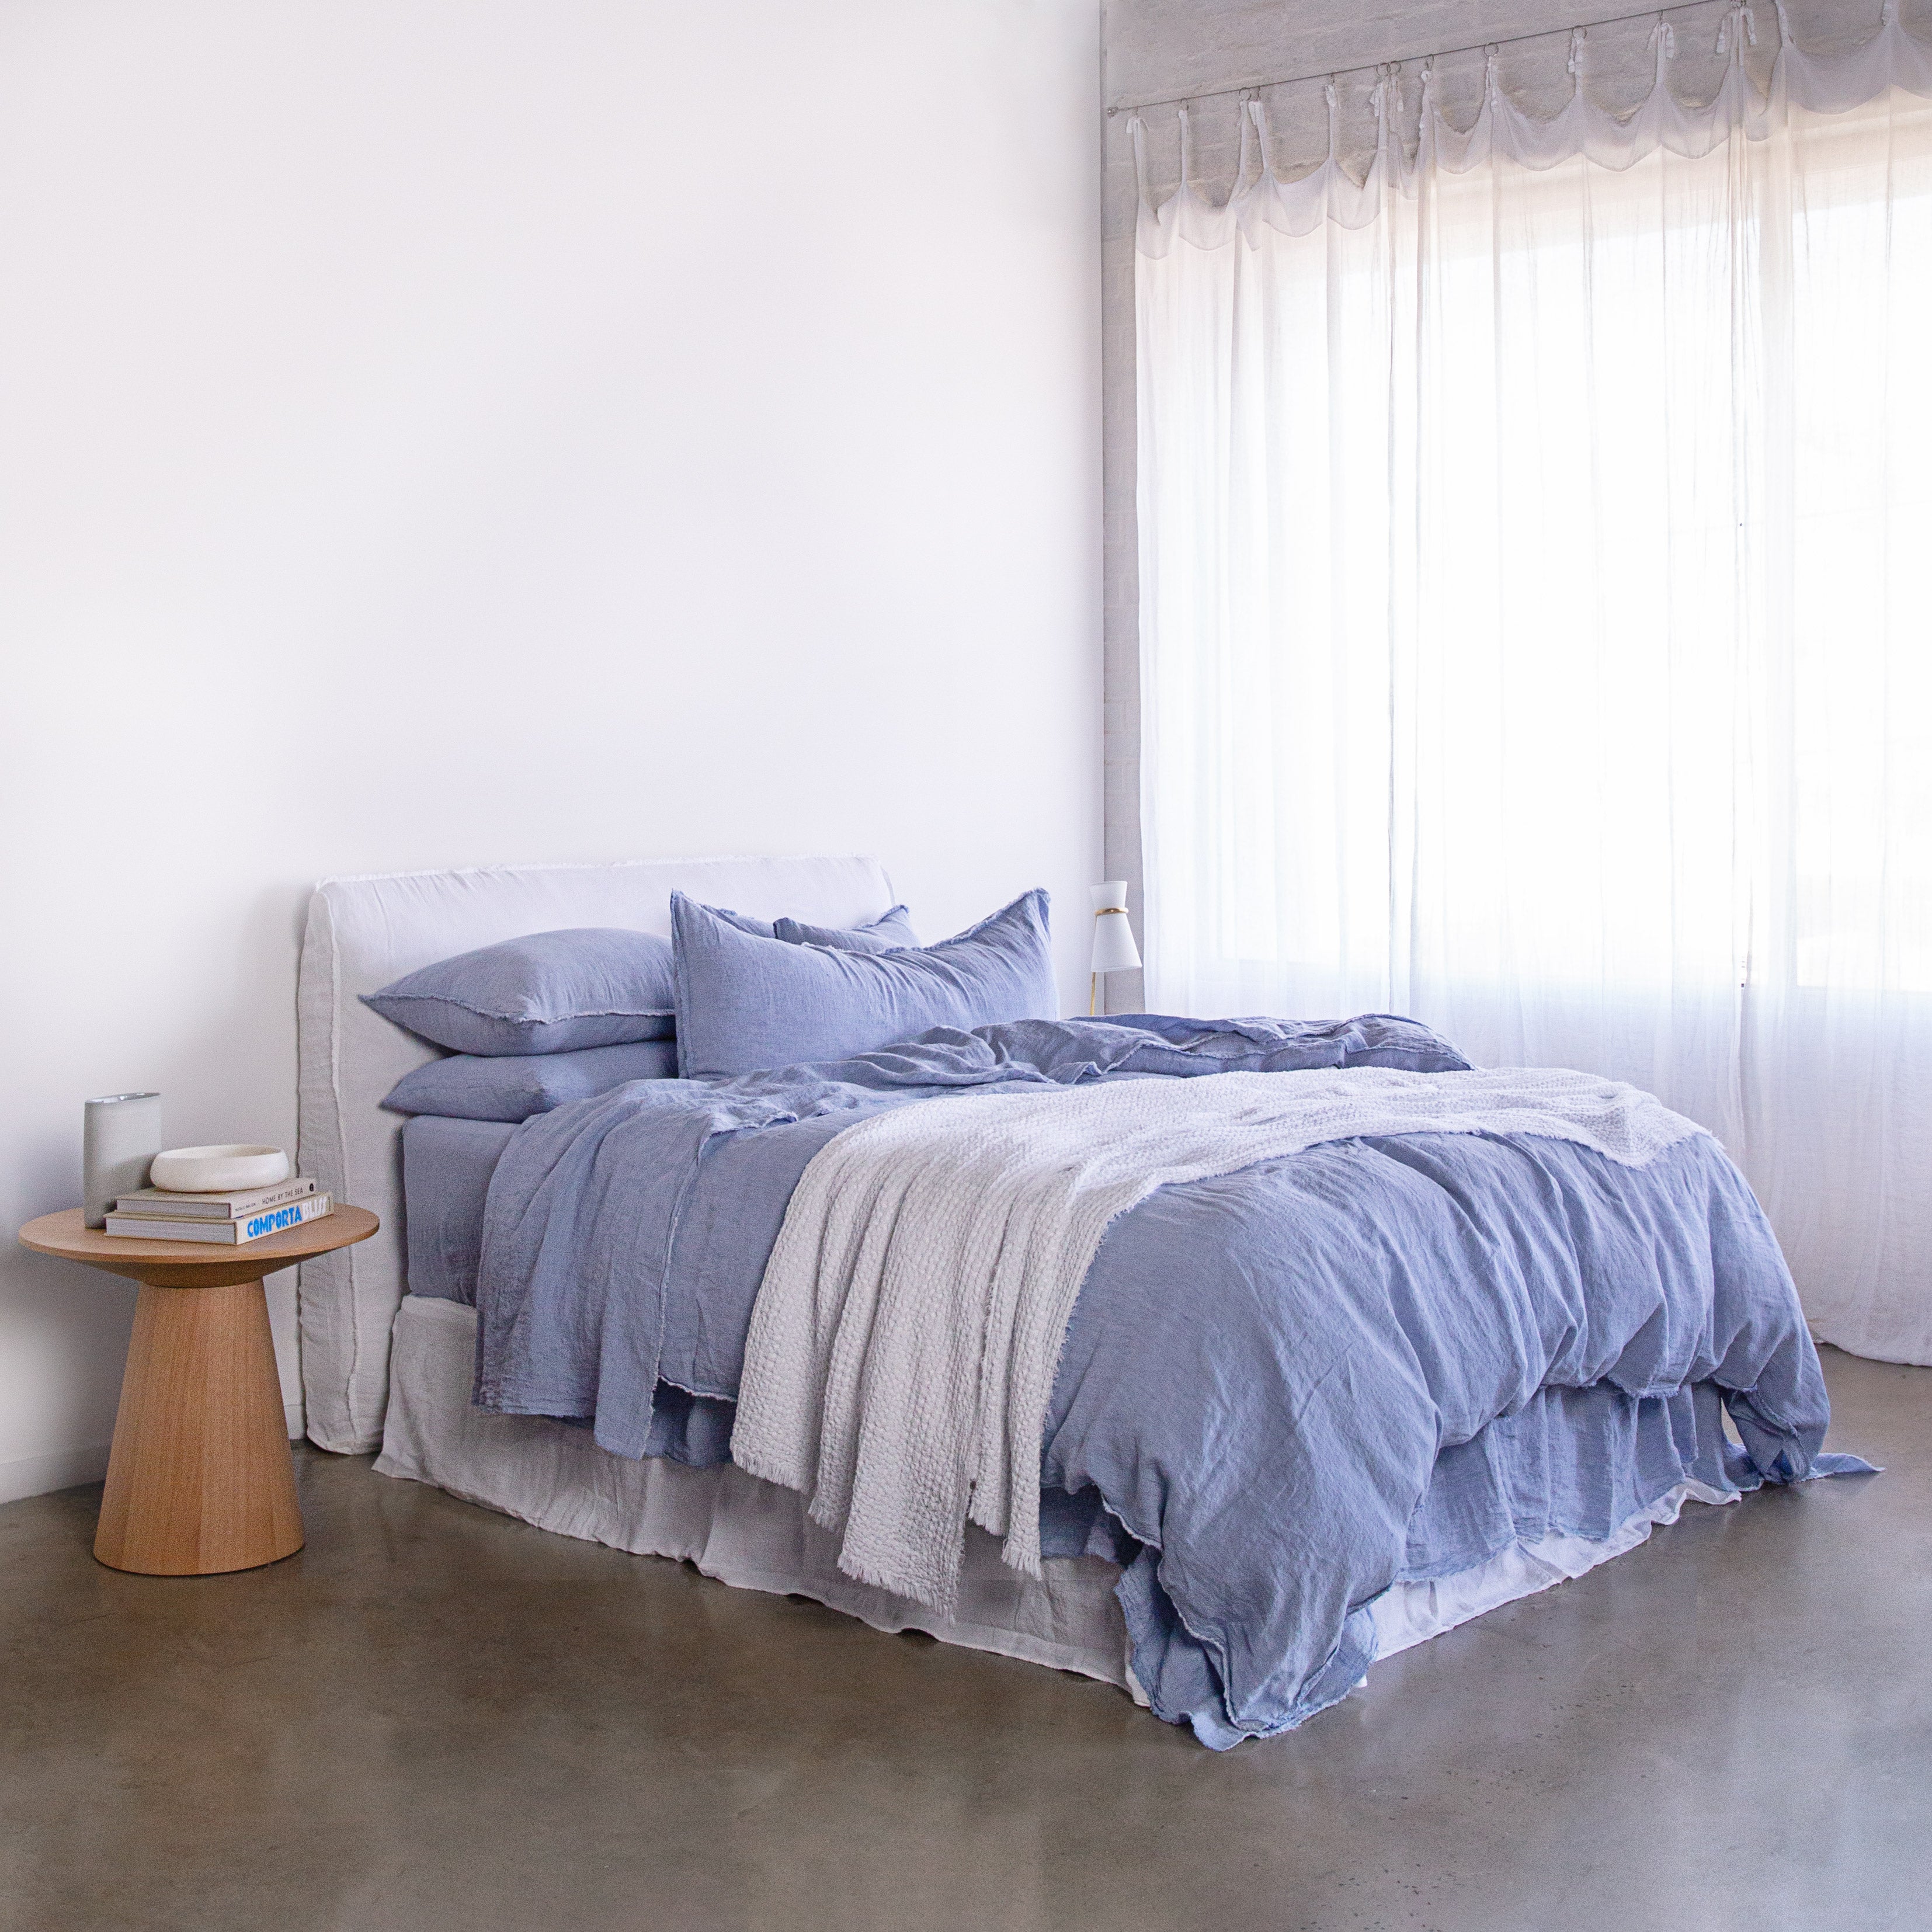 Long Body Pillow | Coastal Blue | Hale Mercantile Co.